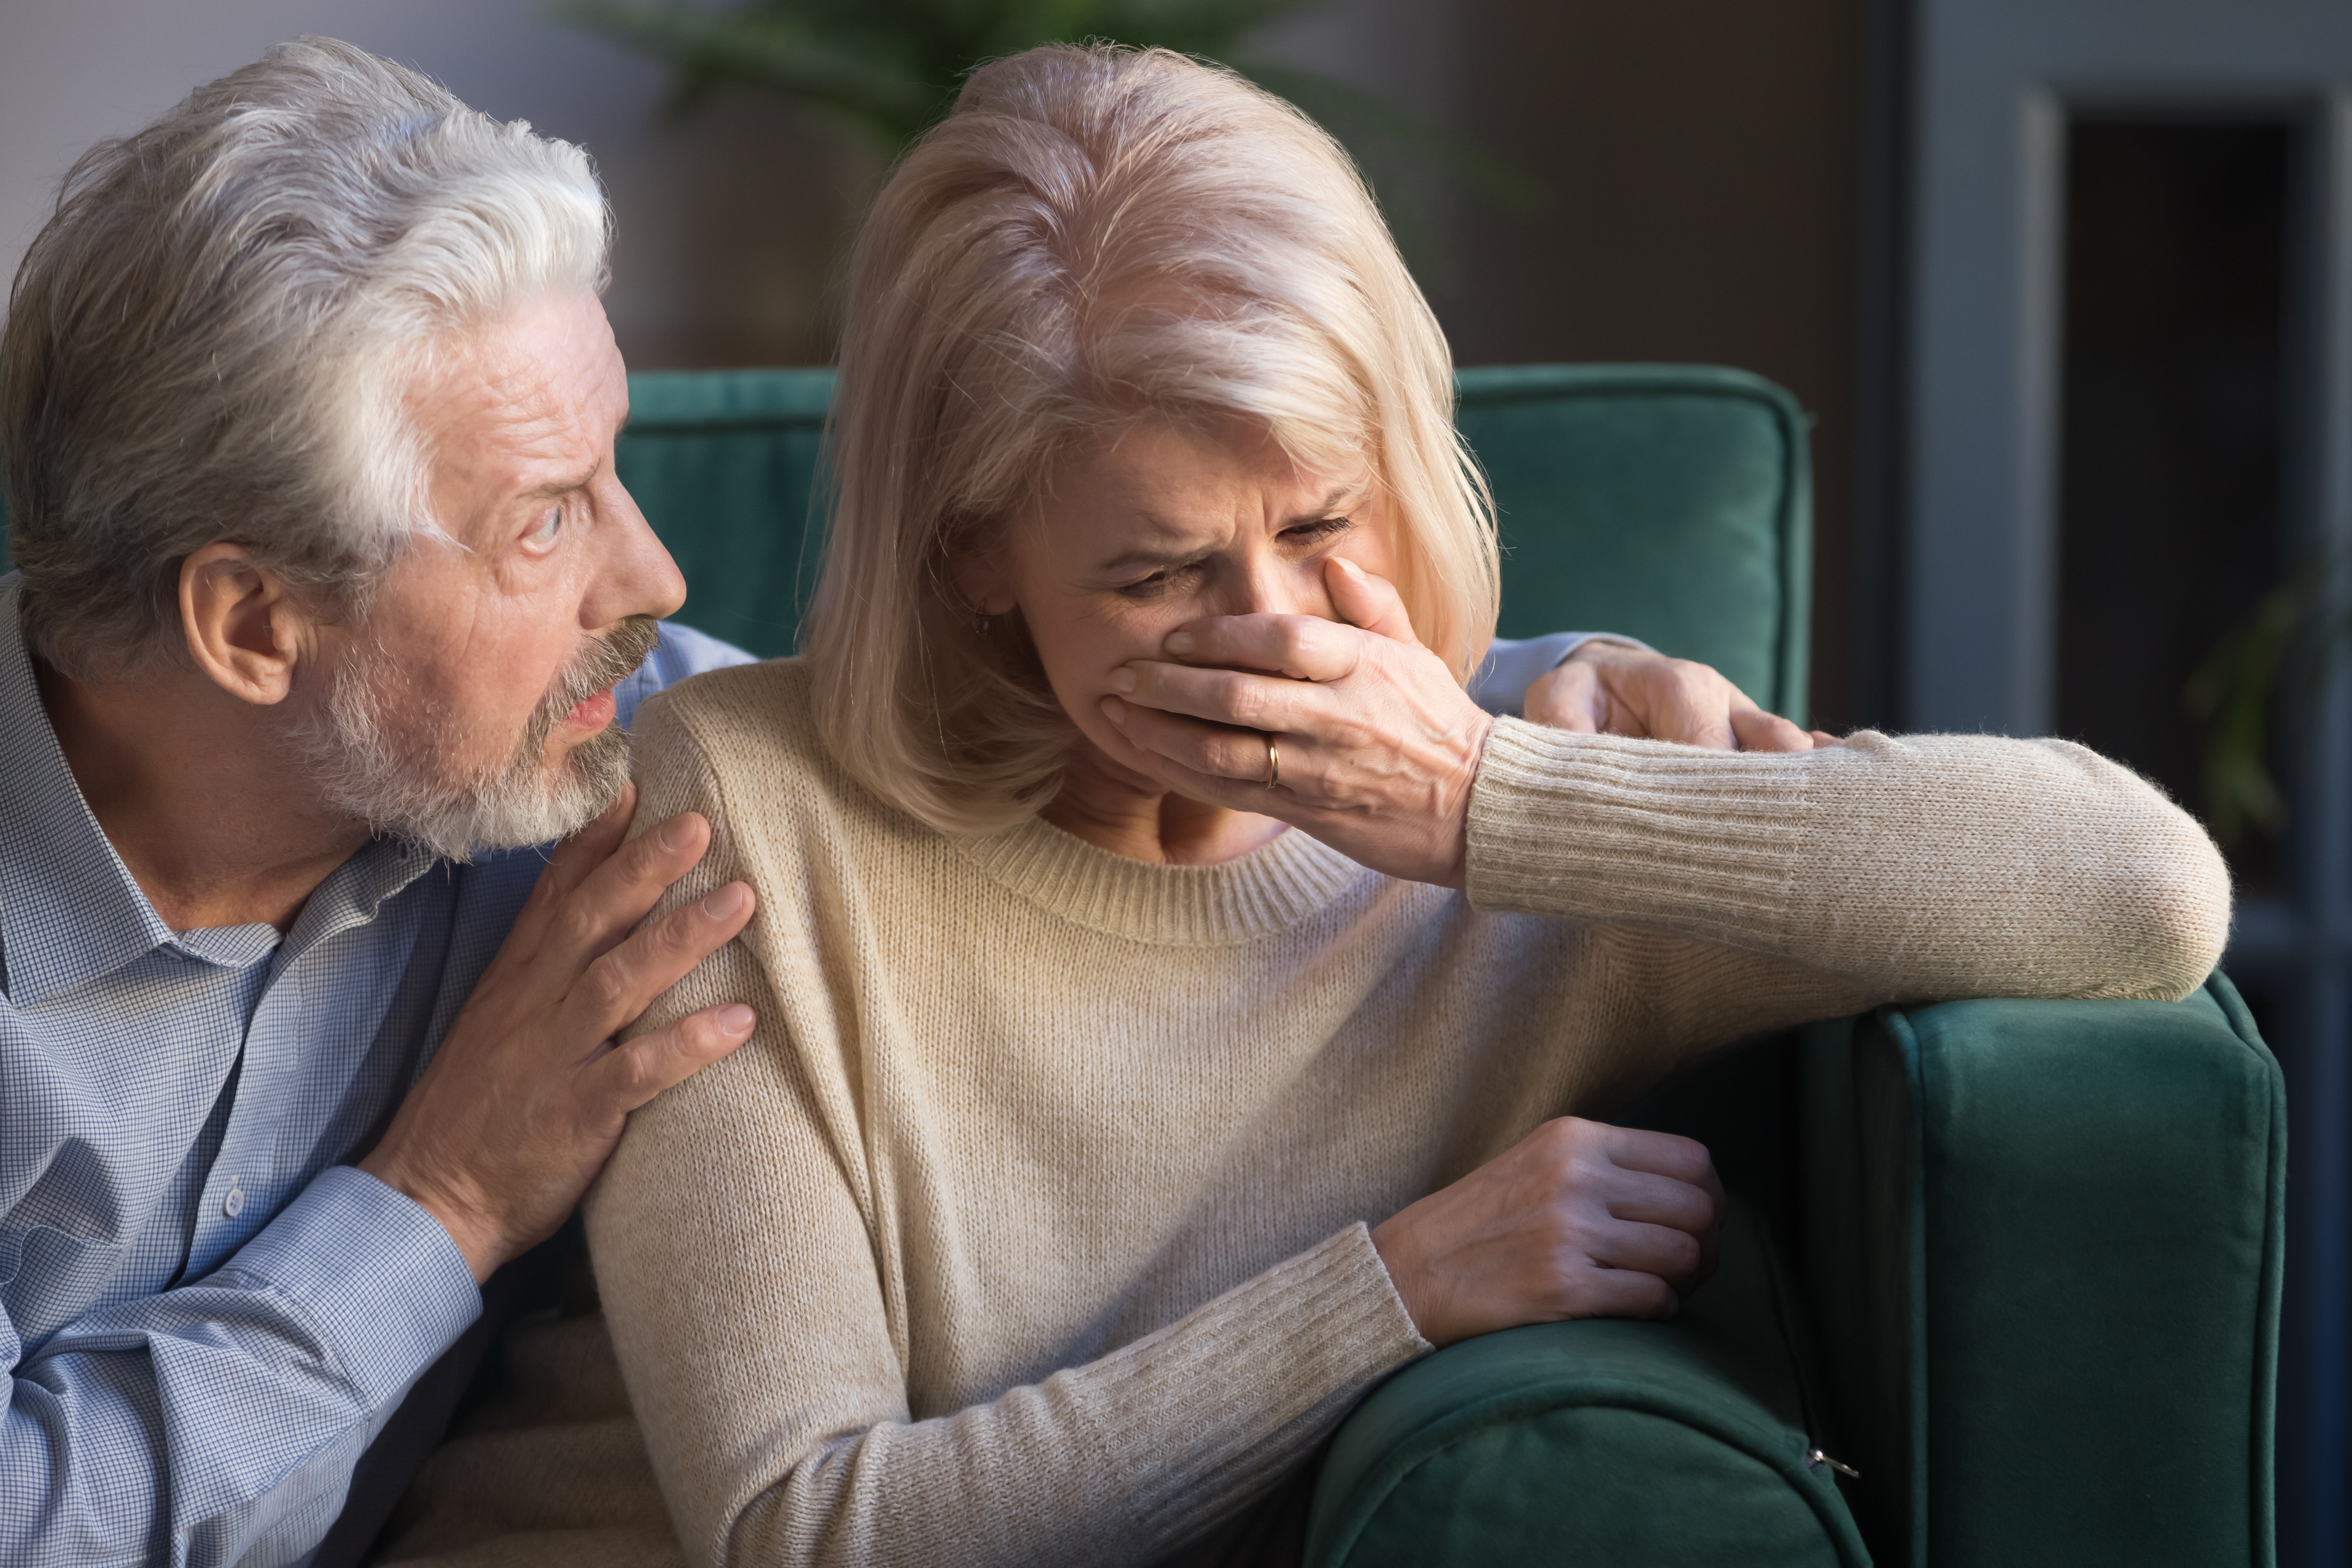 Le mari réconforte sa femme anxieuse | Source : Shutterstock